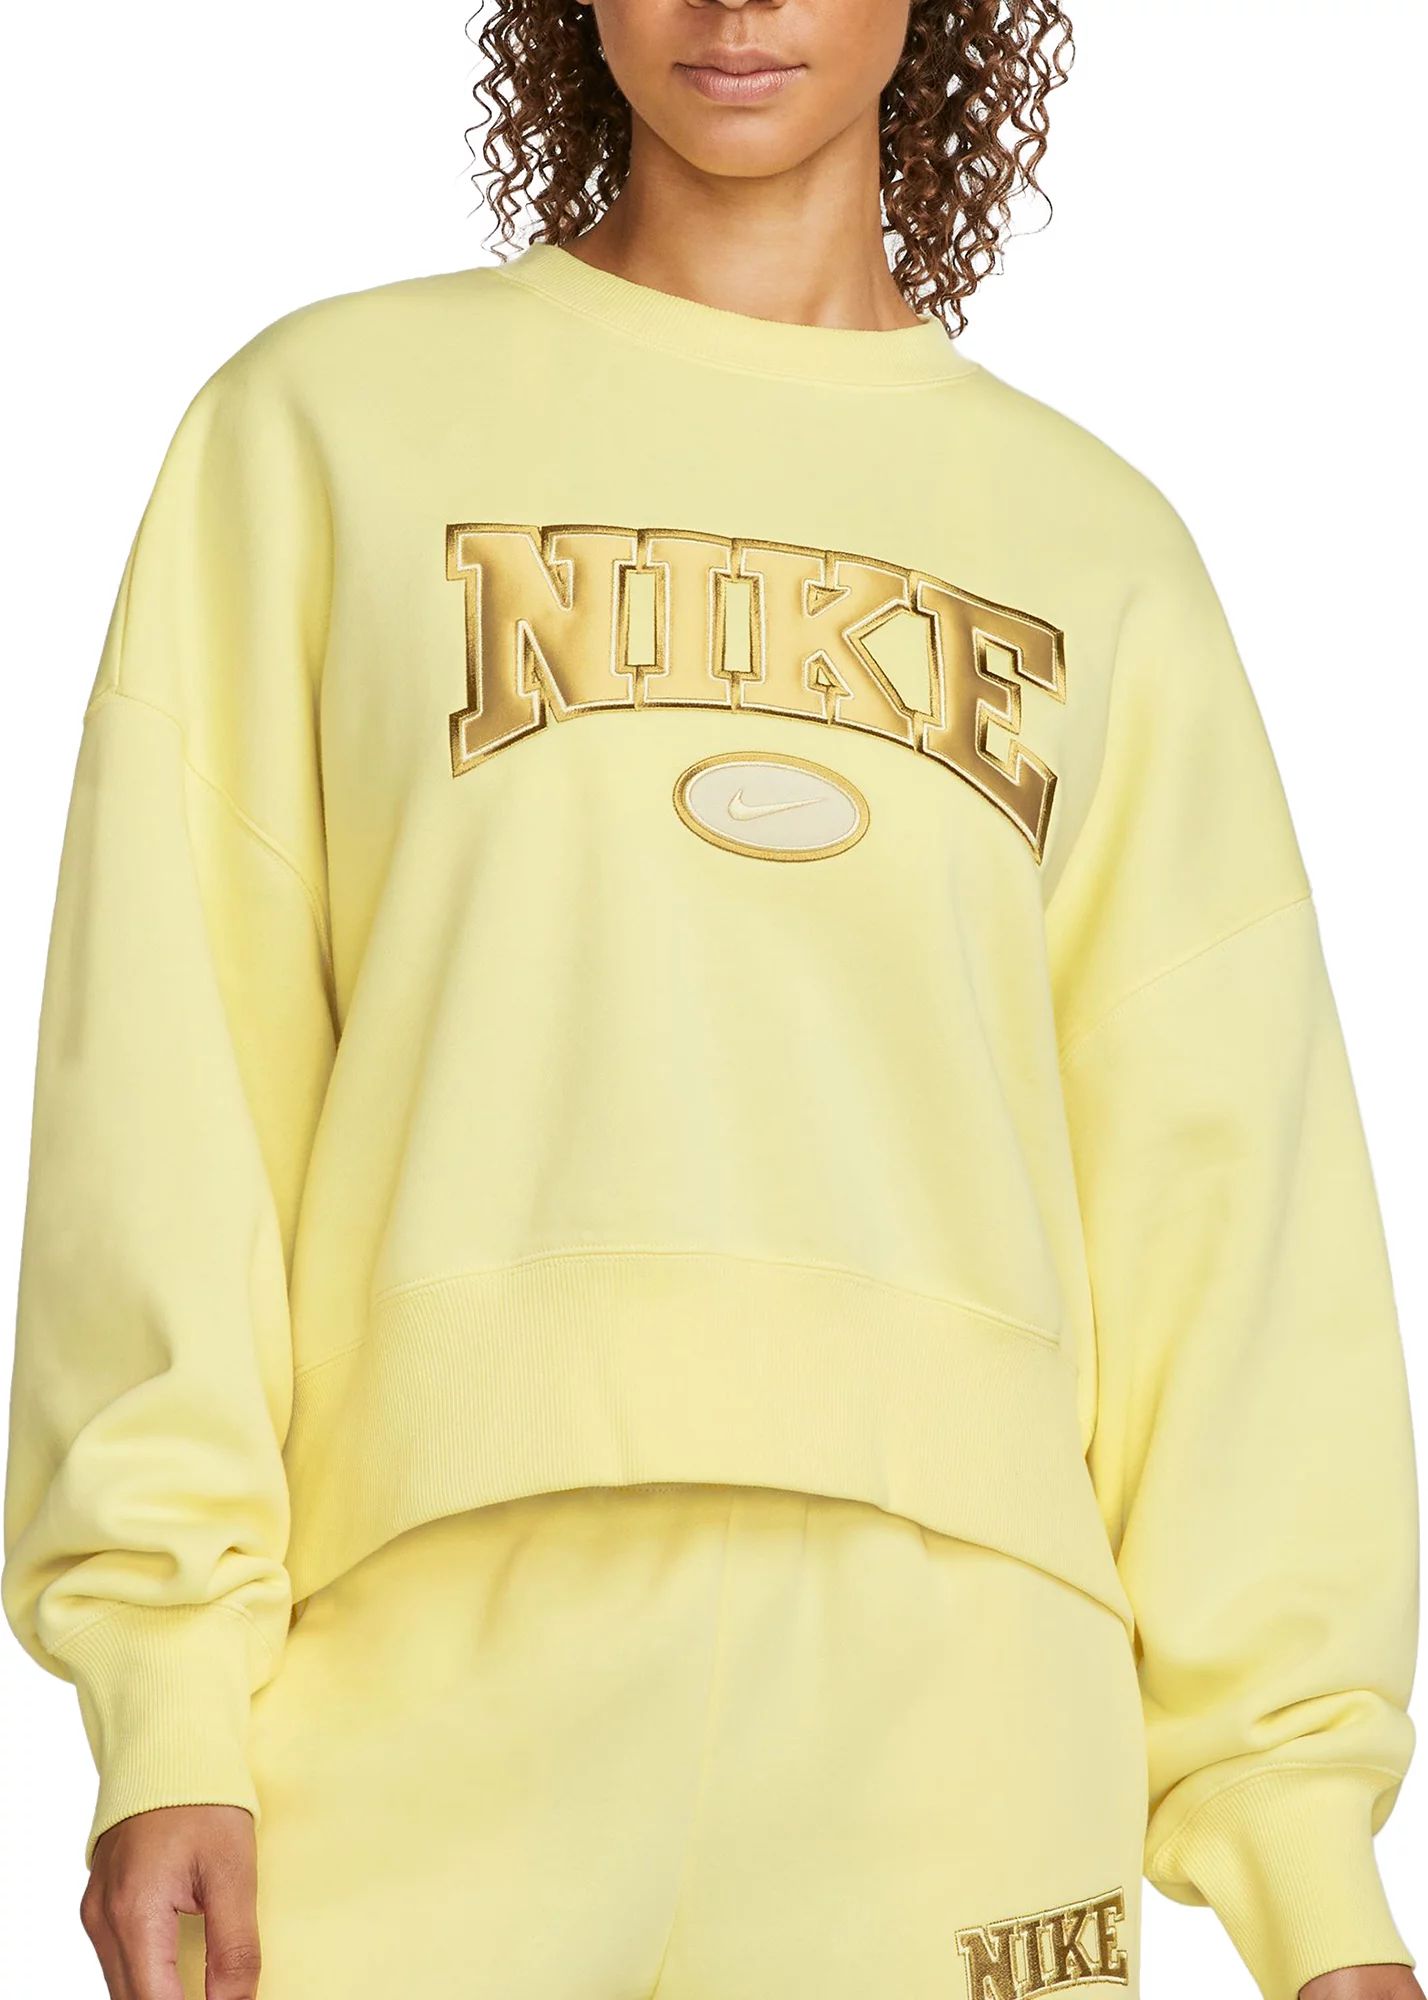 Nike Women's Sportswear Phoenix Fleece City Edition Crewneck Sweatshirt | Dick's Sporting Goods